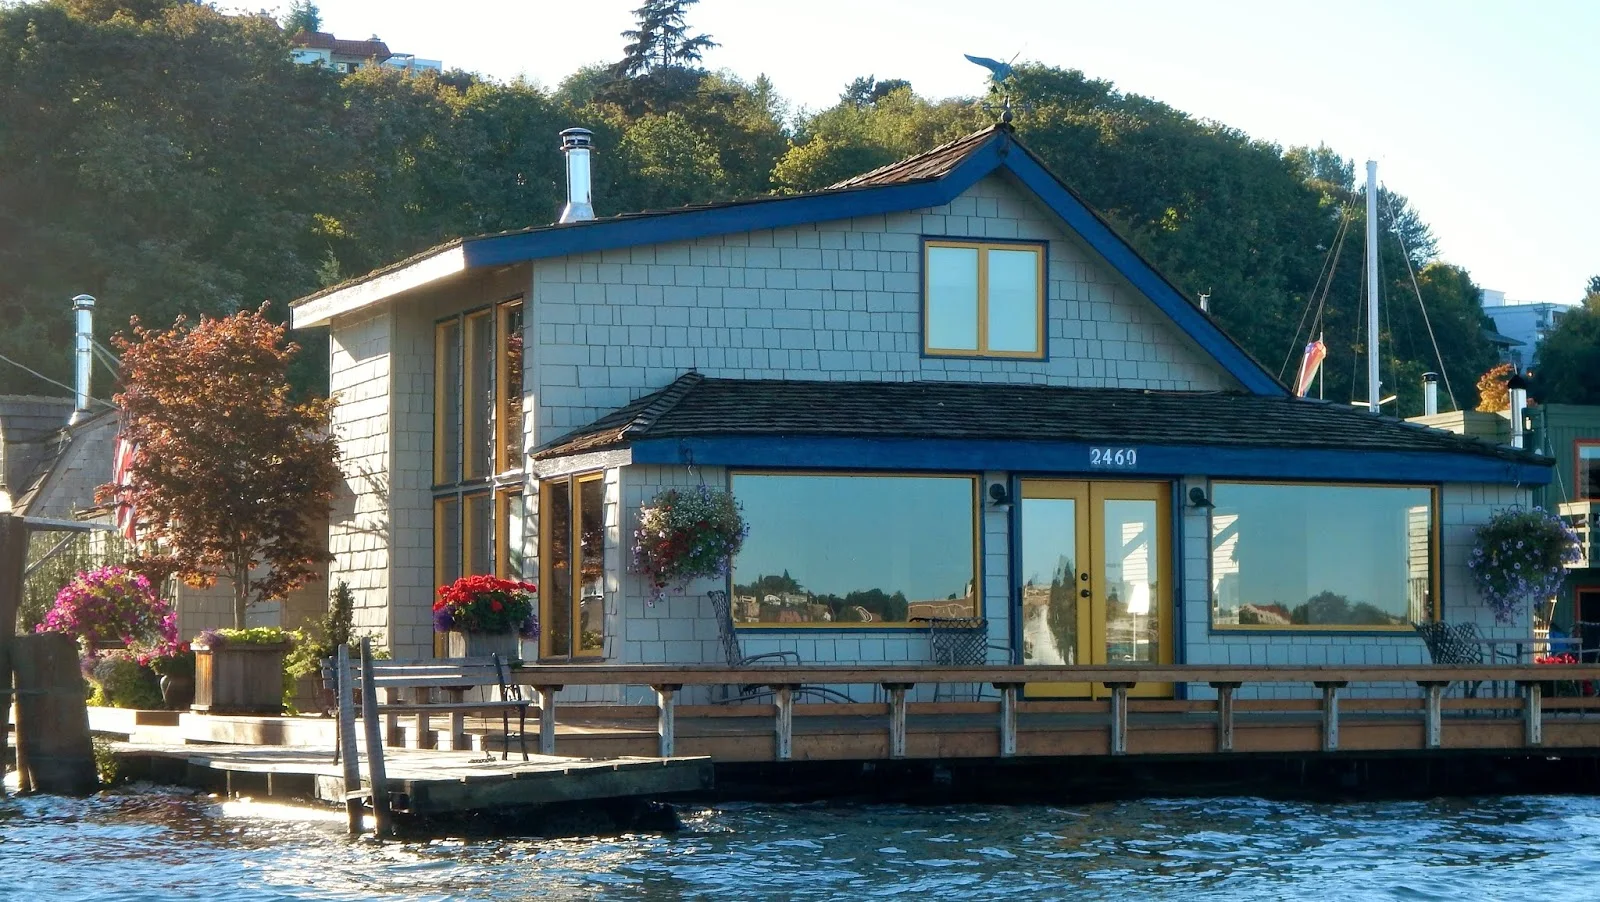 Tom Hanks's houseboat in Sleepless in Seattle